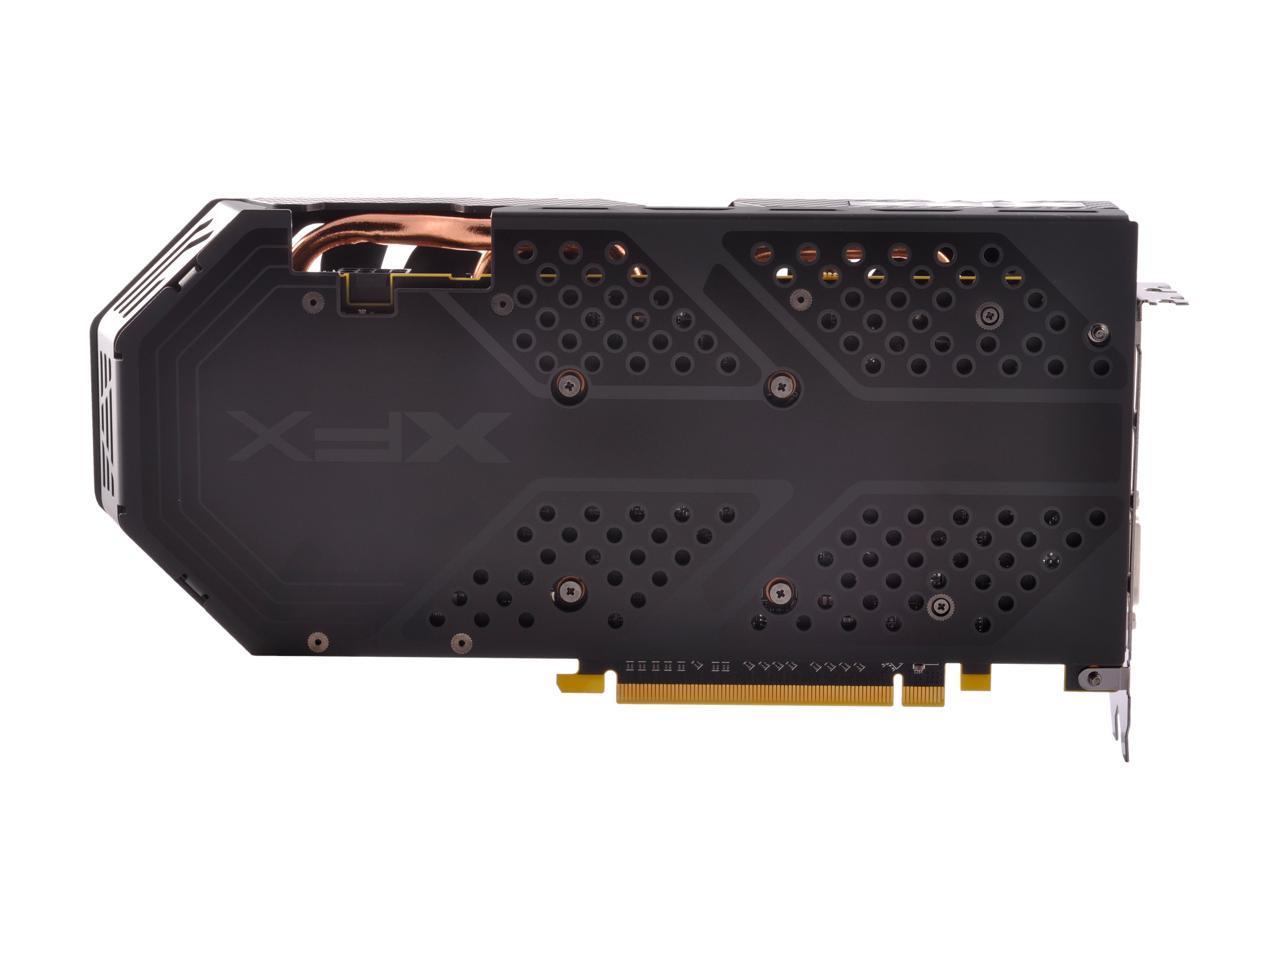 XFX Radeon RX 580 GTS Black Edition 1405 MHz OC+, 8GB 256-bit GDDR5, DX12 VR Ready, Double Dissipation, Dual BIOS, PCI-E AMD Graphics Card (RX-580P828D6)